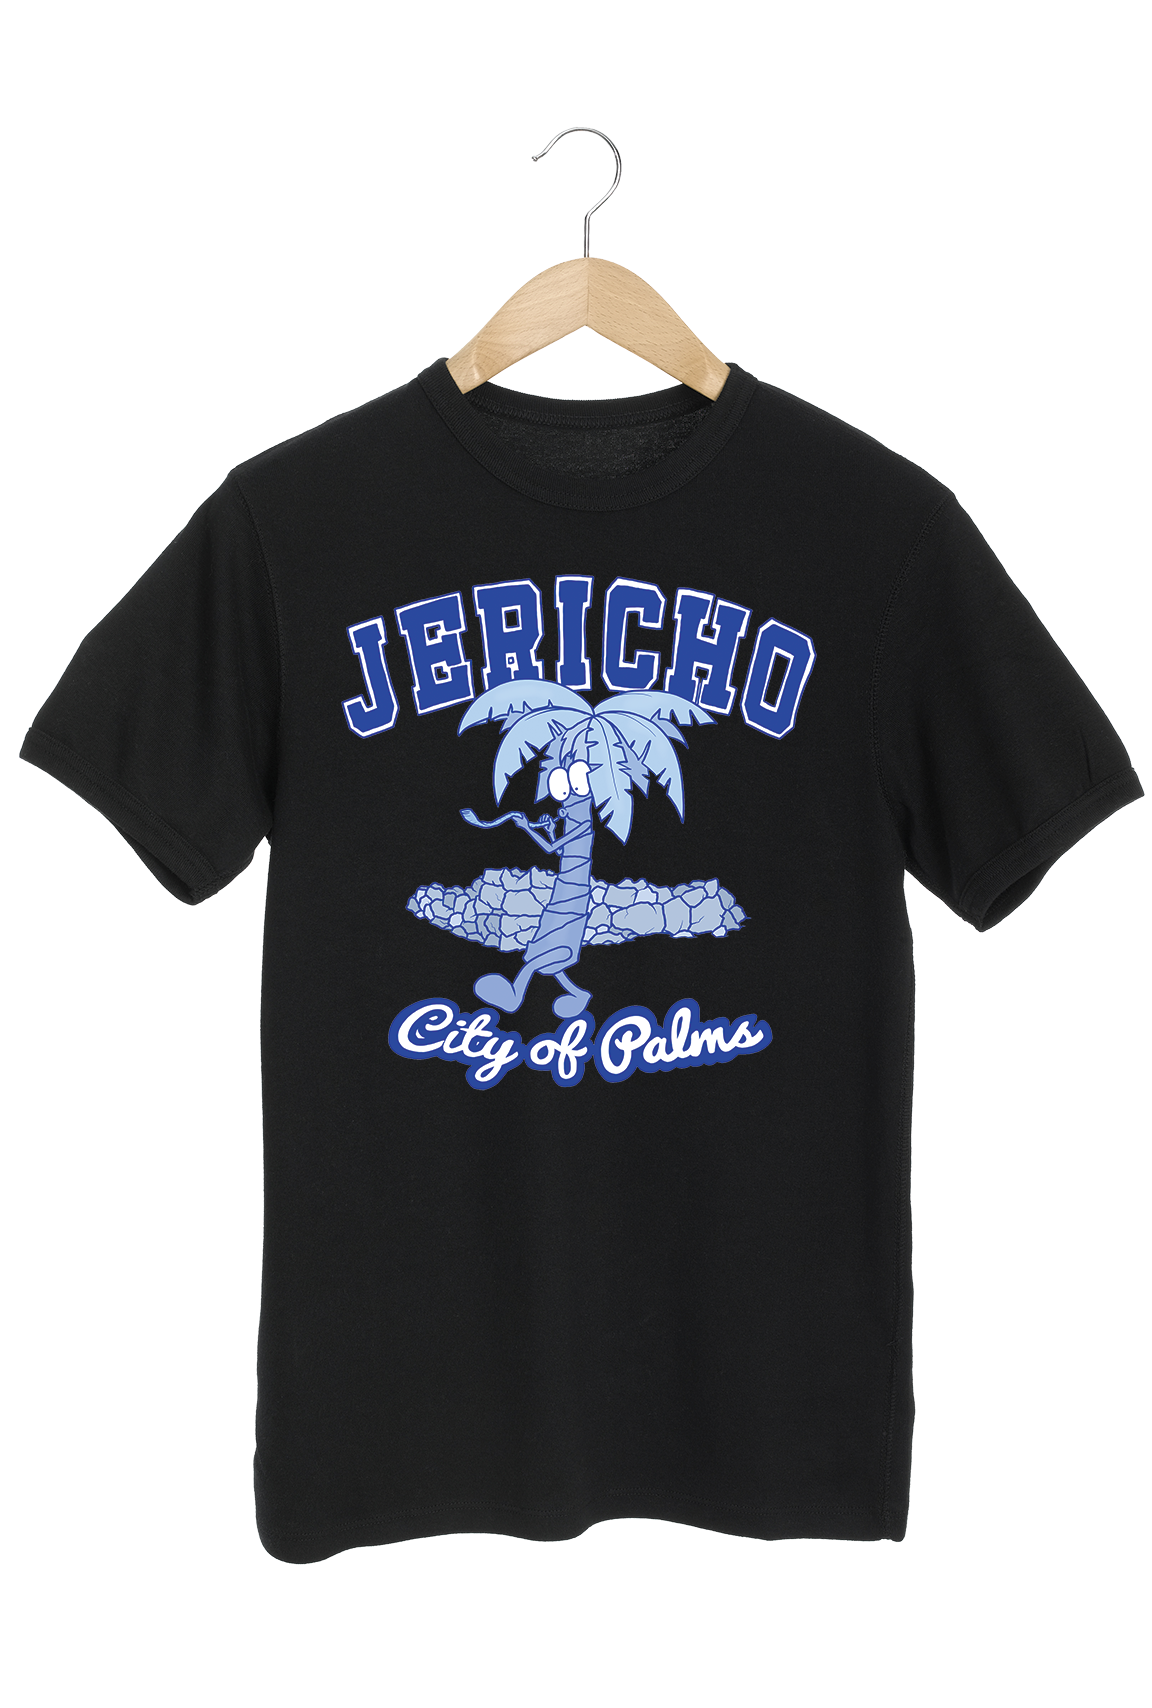 jericho  shirt 2mb.png